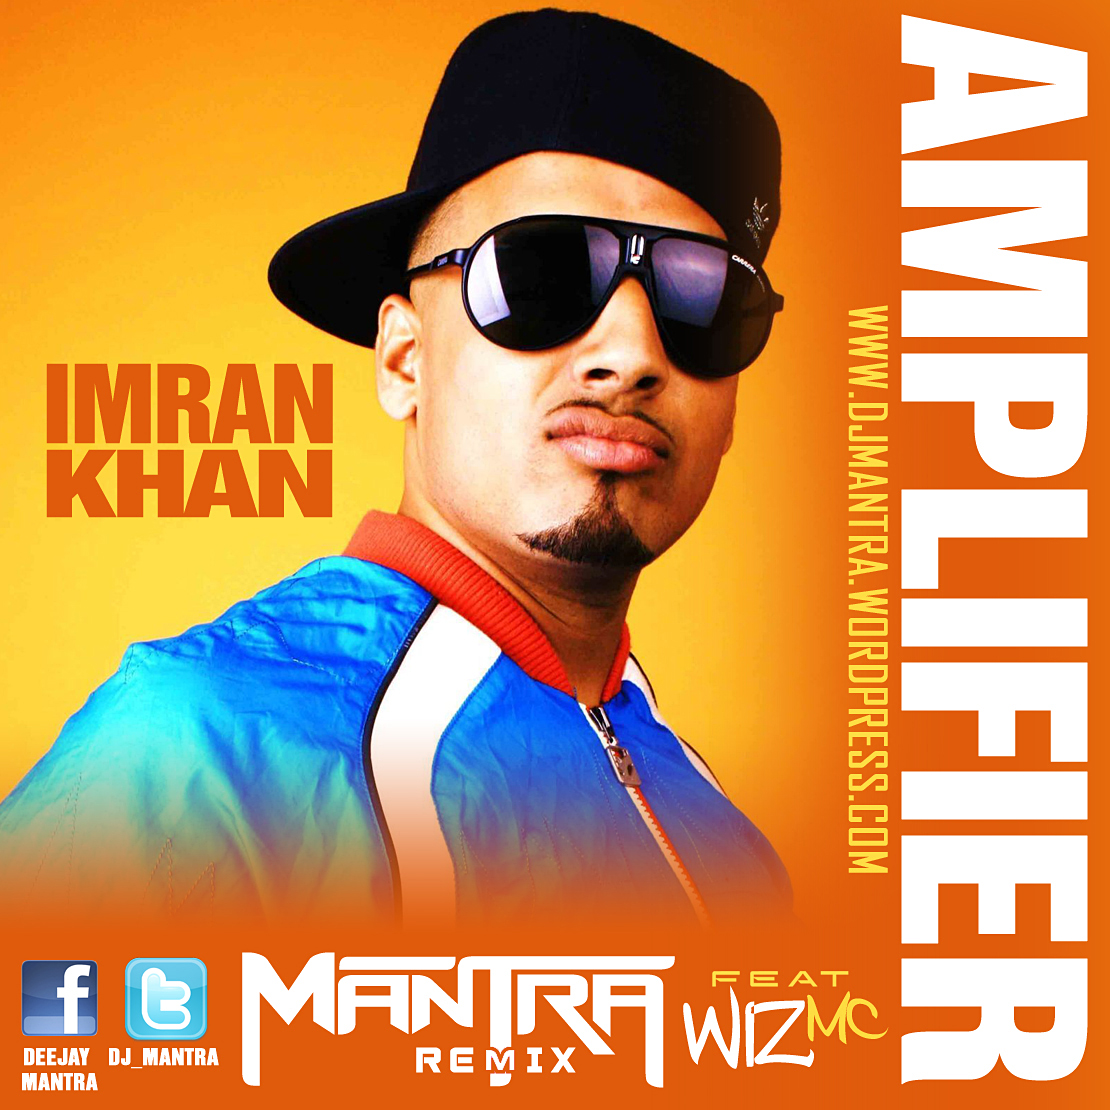 Imran khan - amplifier mp3 song download